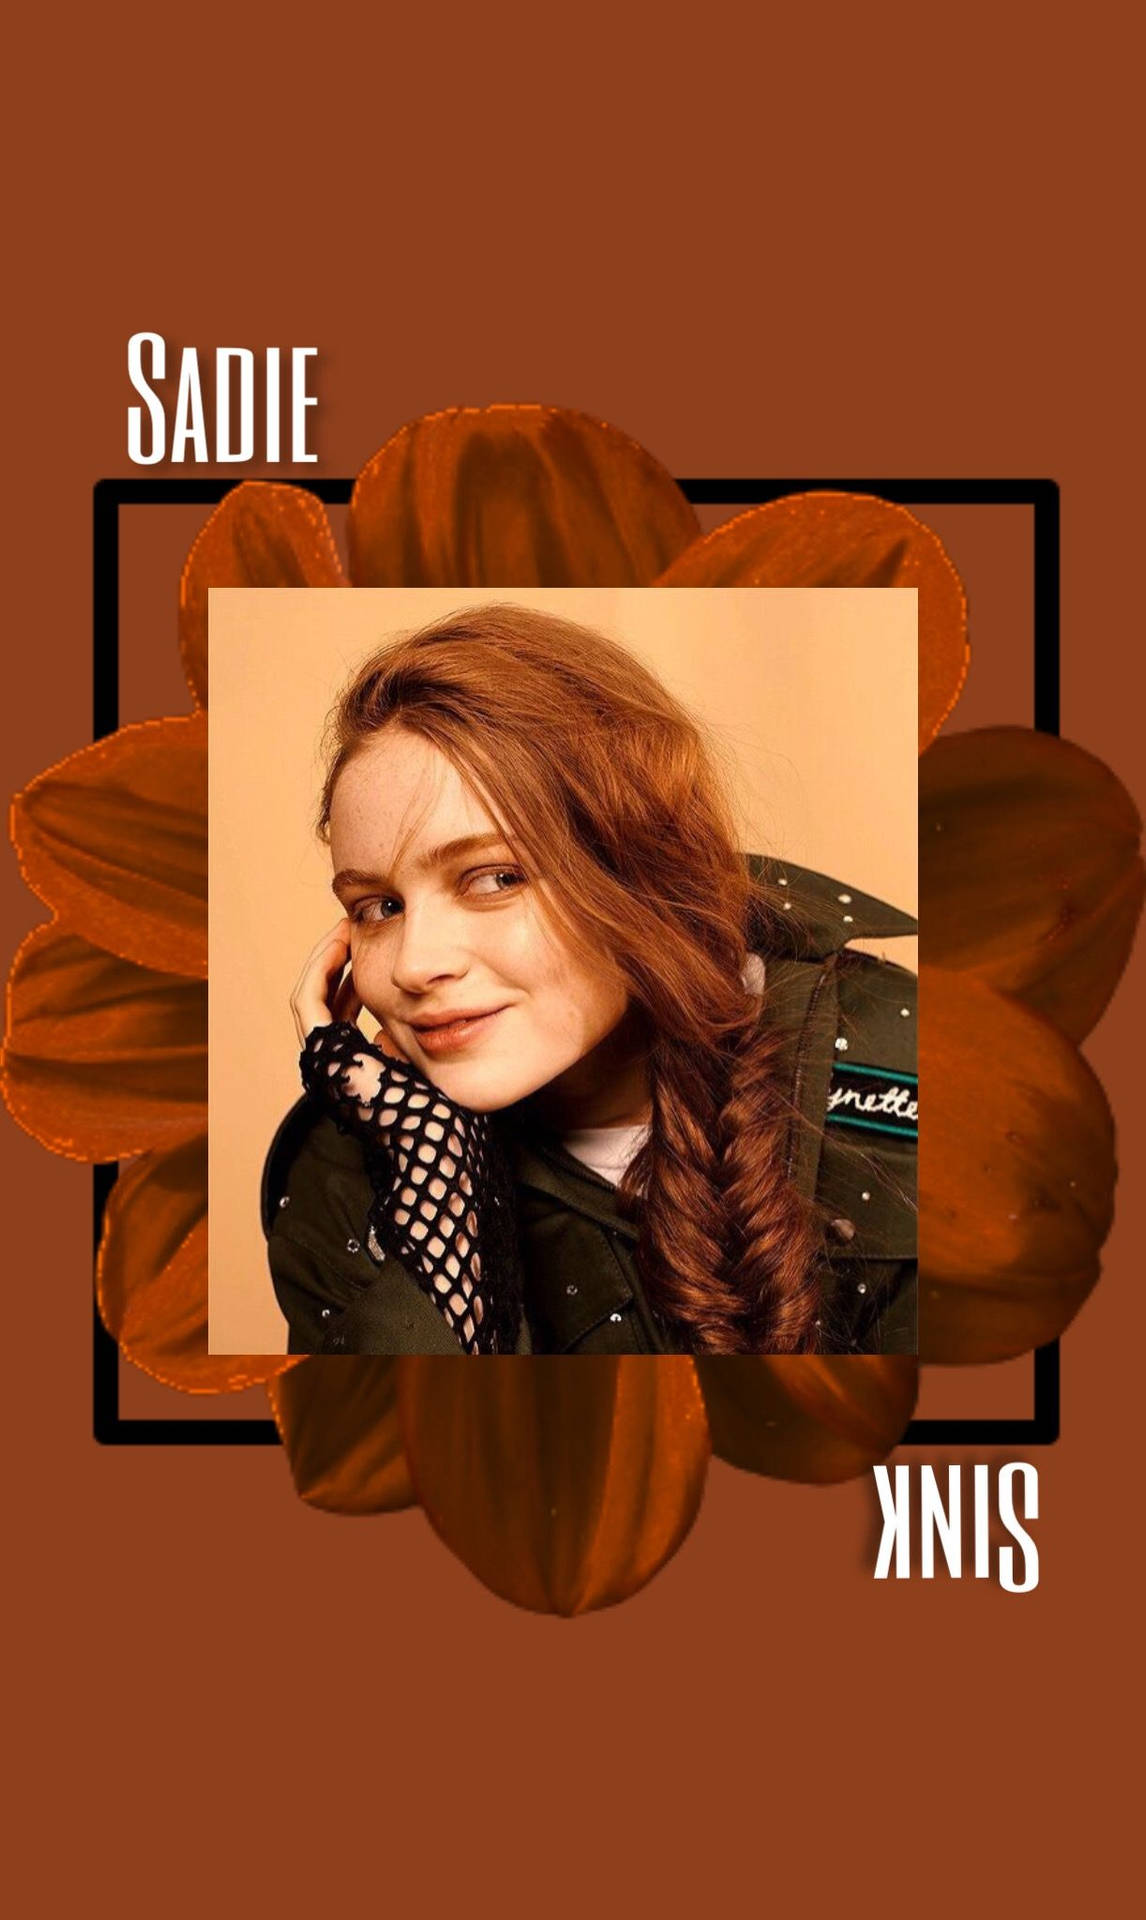 Digital Poster Of Sadie Sink Wallpaper